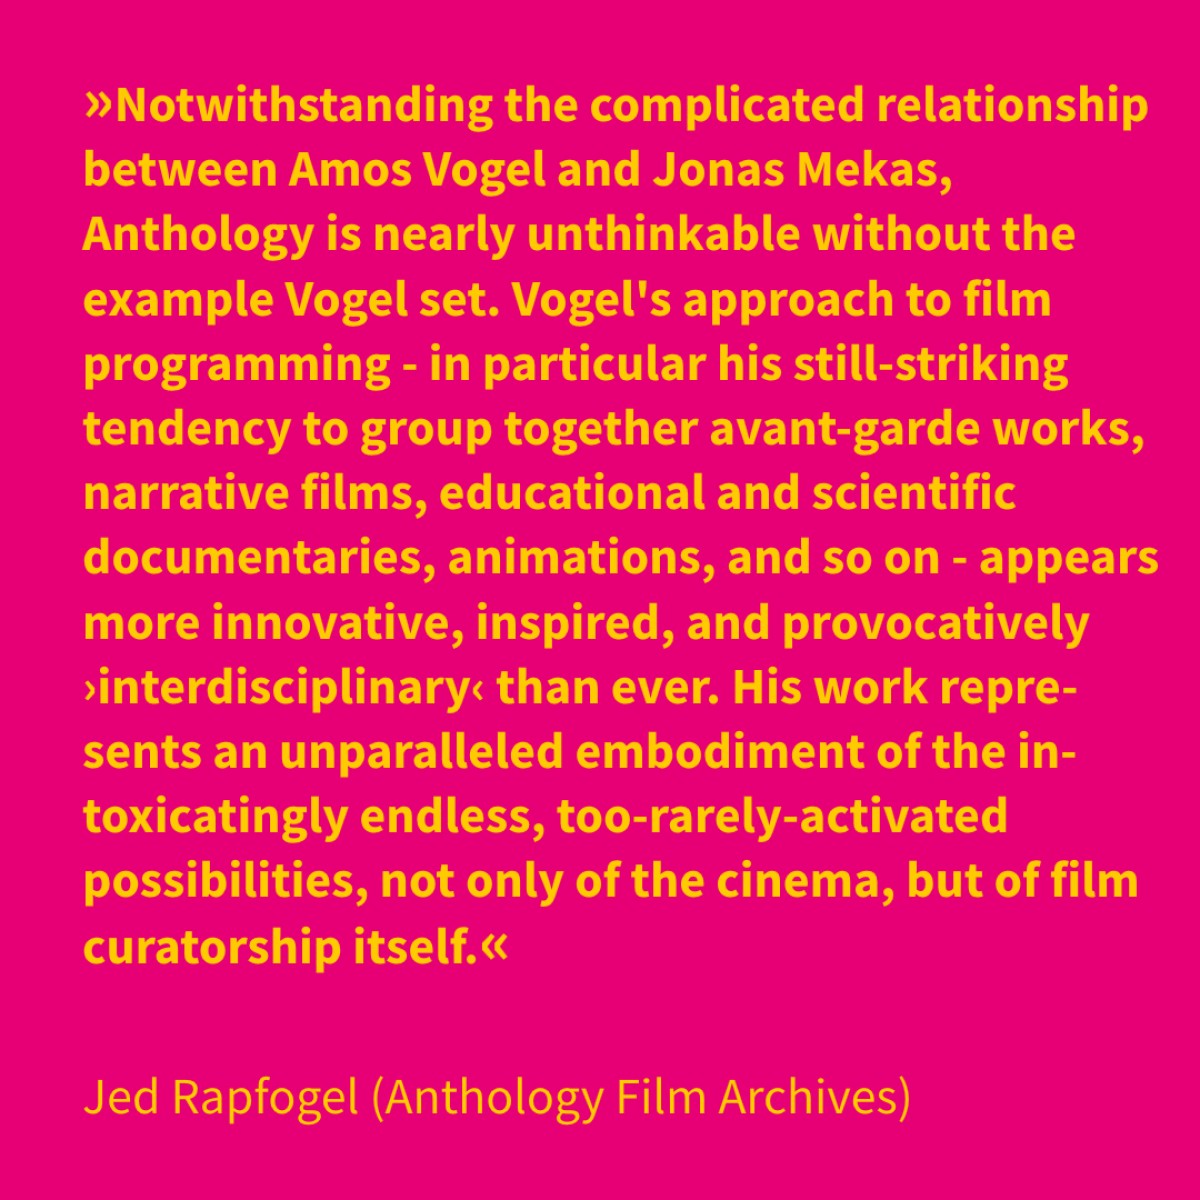 Jed Rapfogel (Anthology Film Archives)